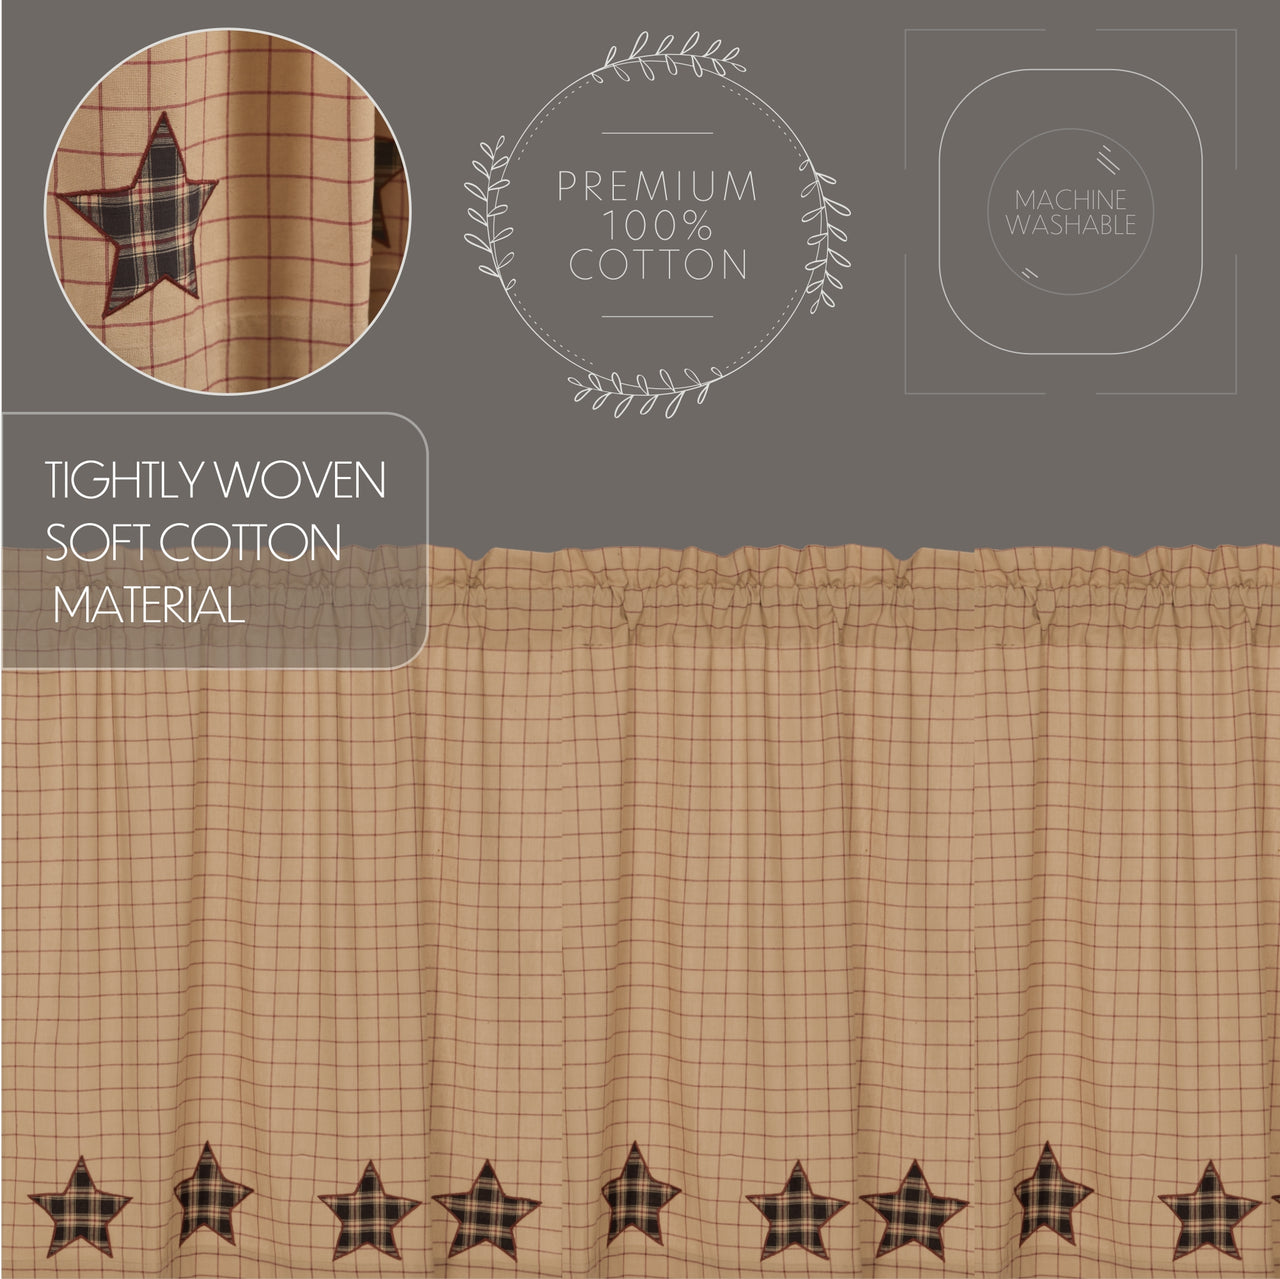 Bingham Star Valance Curtain Applique Star Khaki 16" x 72" VHC Brands